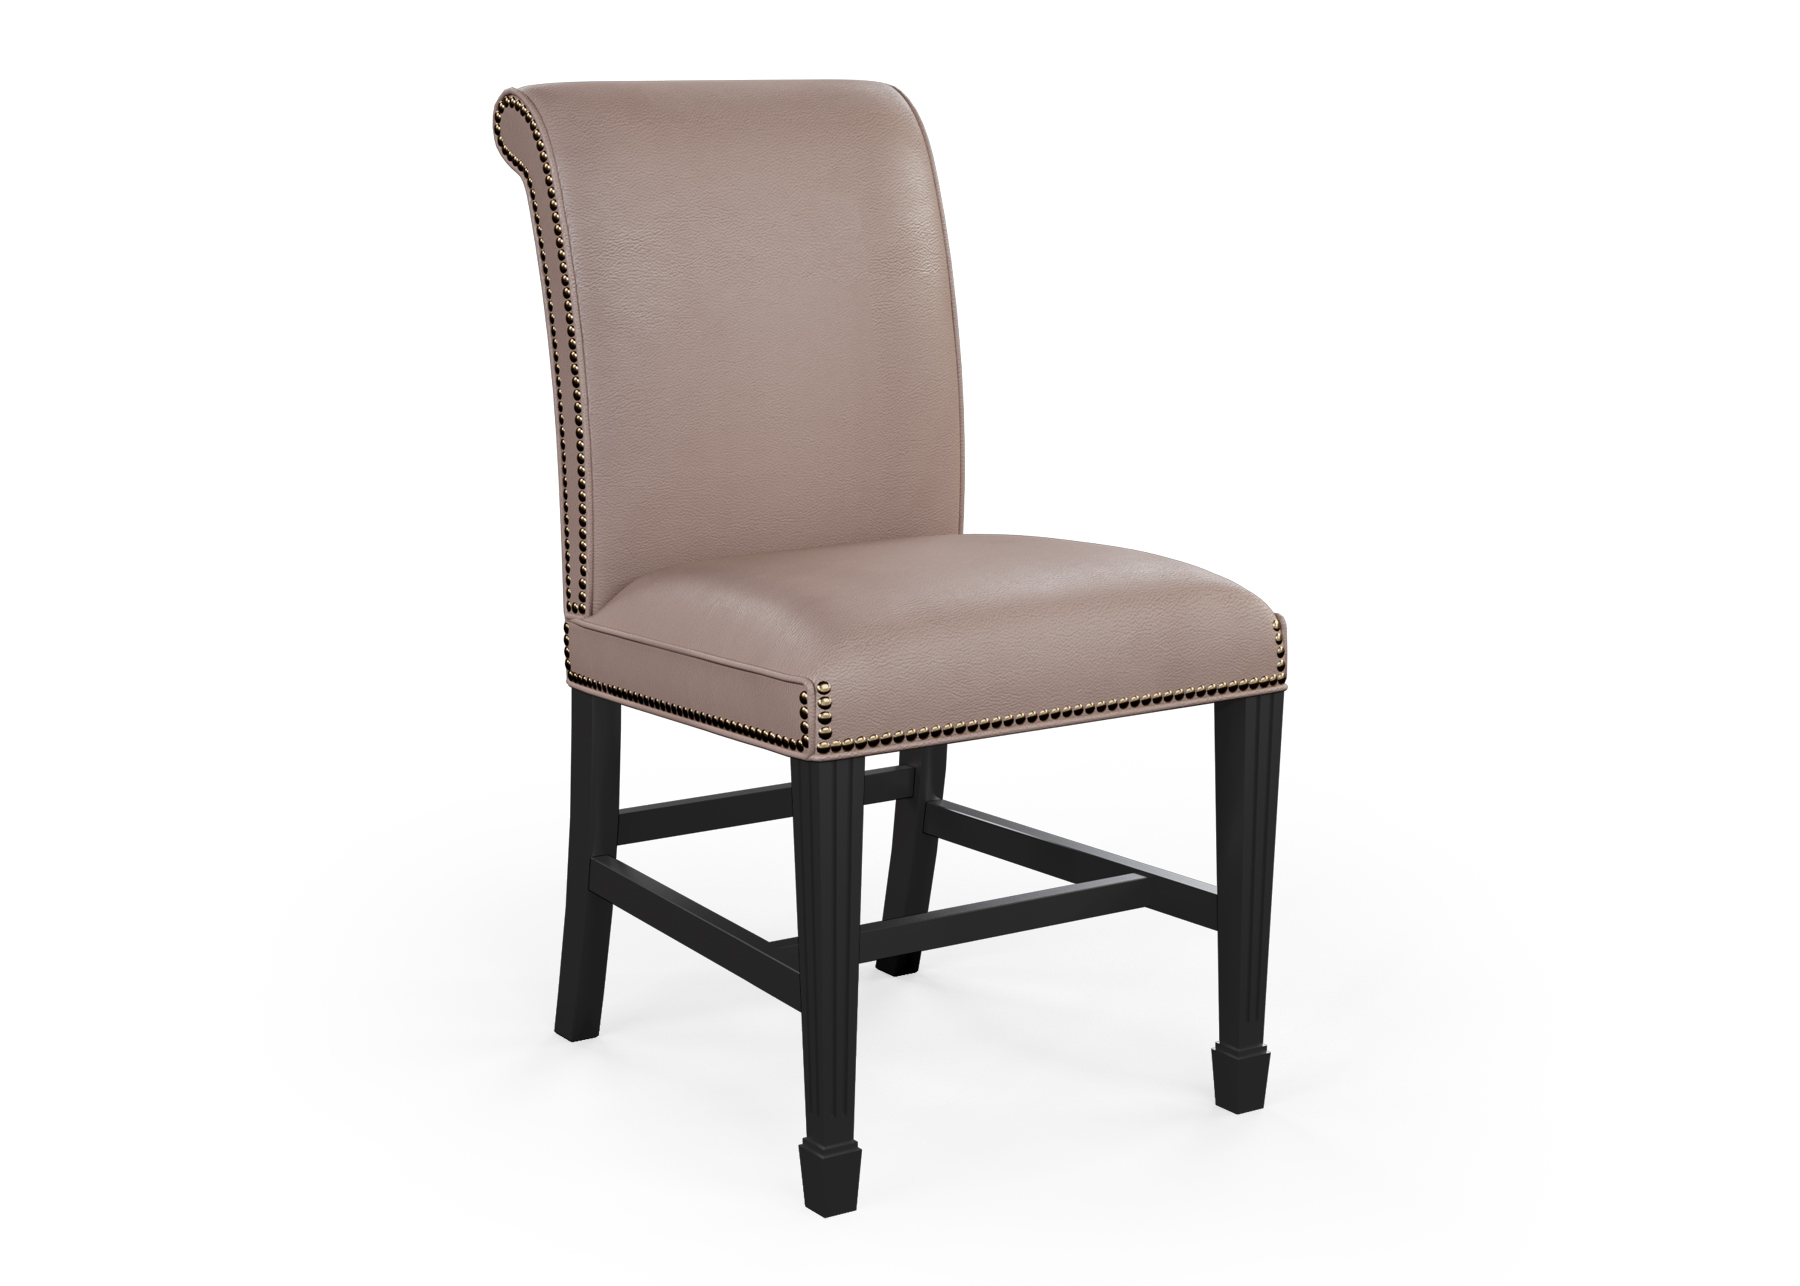 S-620A_Treasurers-Side-Chair-A.jpg